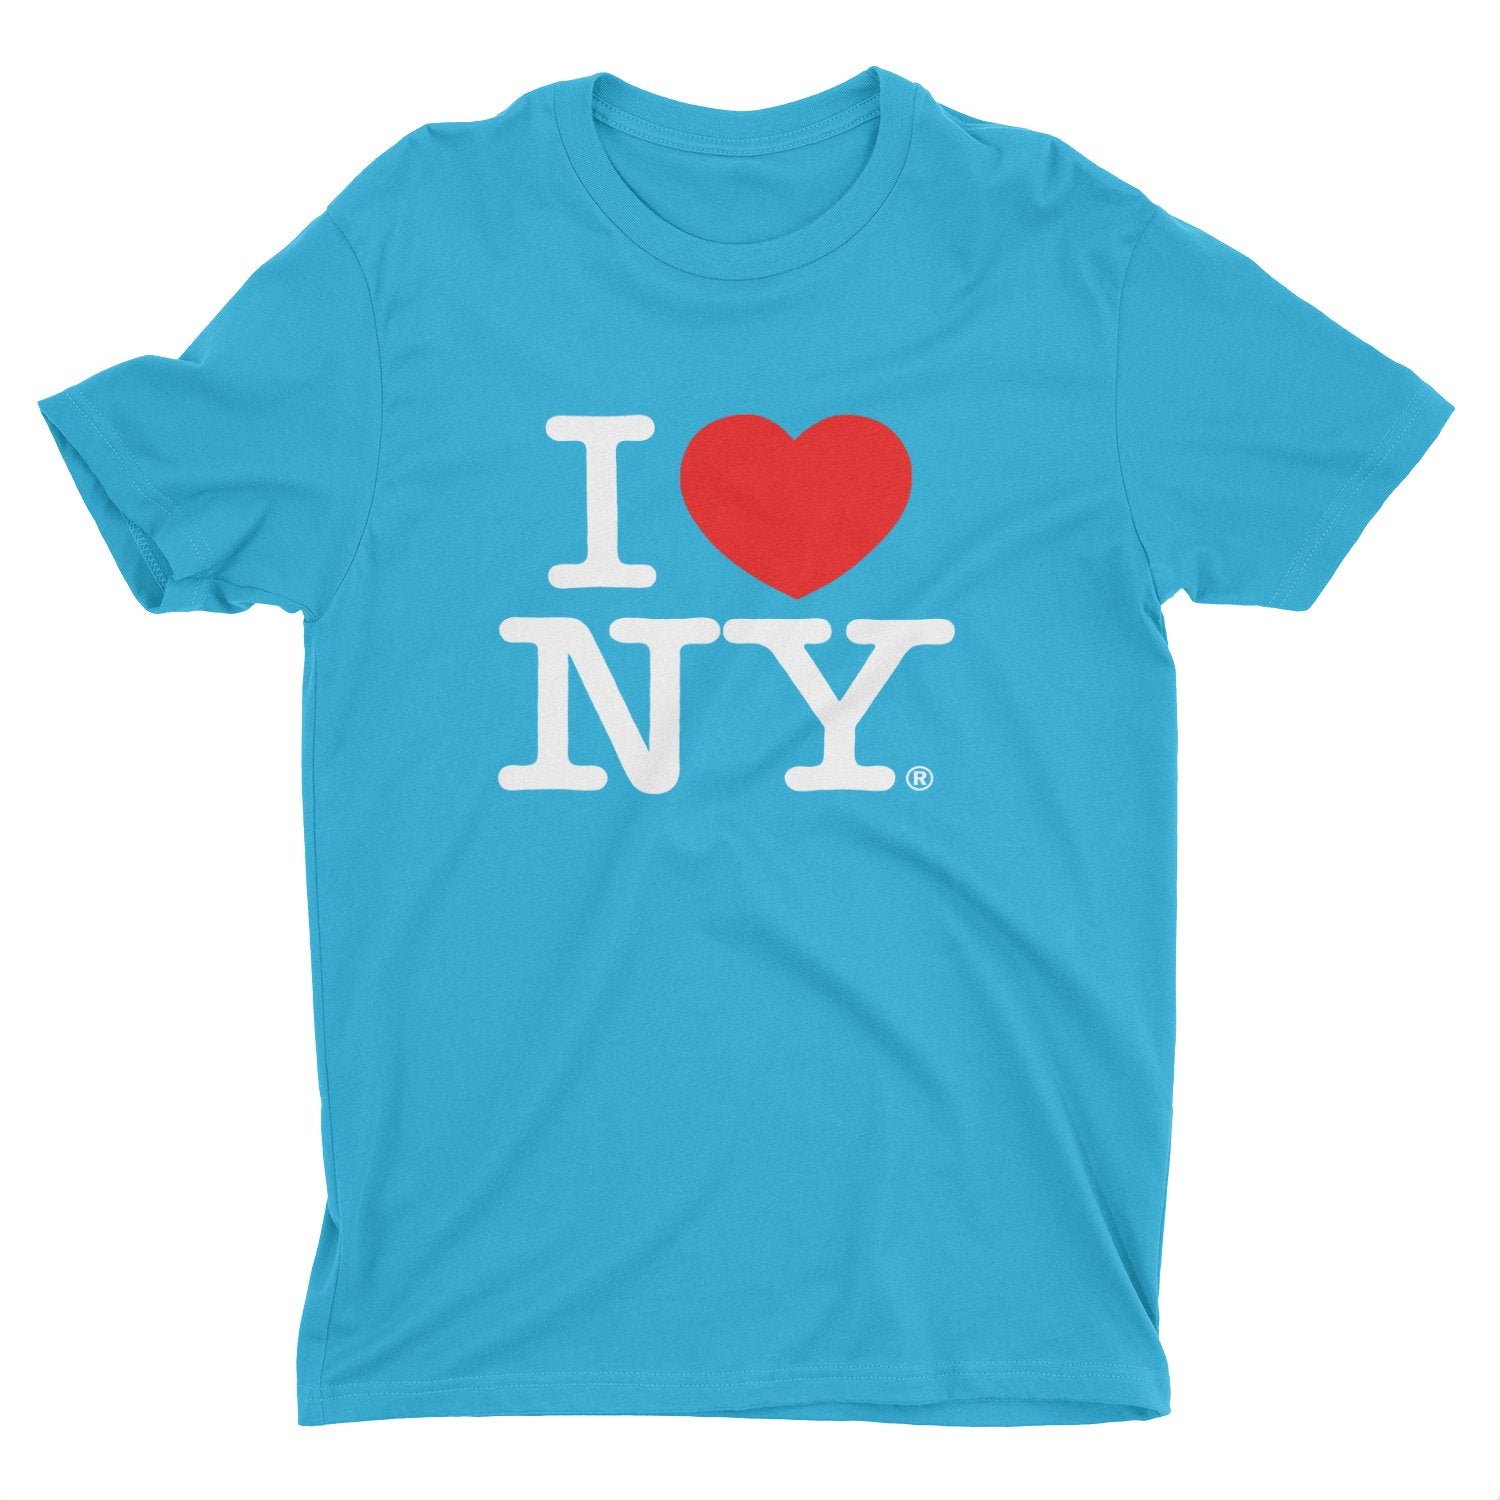 I Love NY New York Kids Short Sleeve Screen Print Heart T-Shirt Turquoise